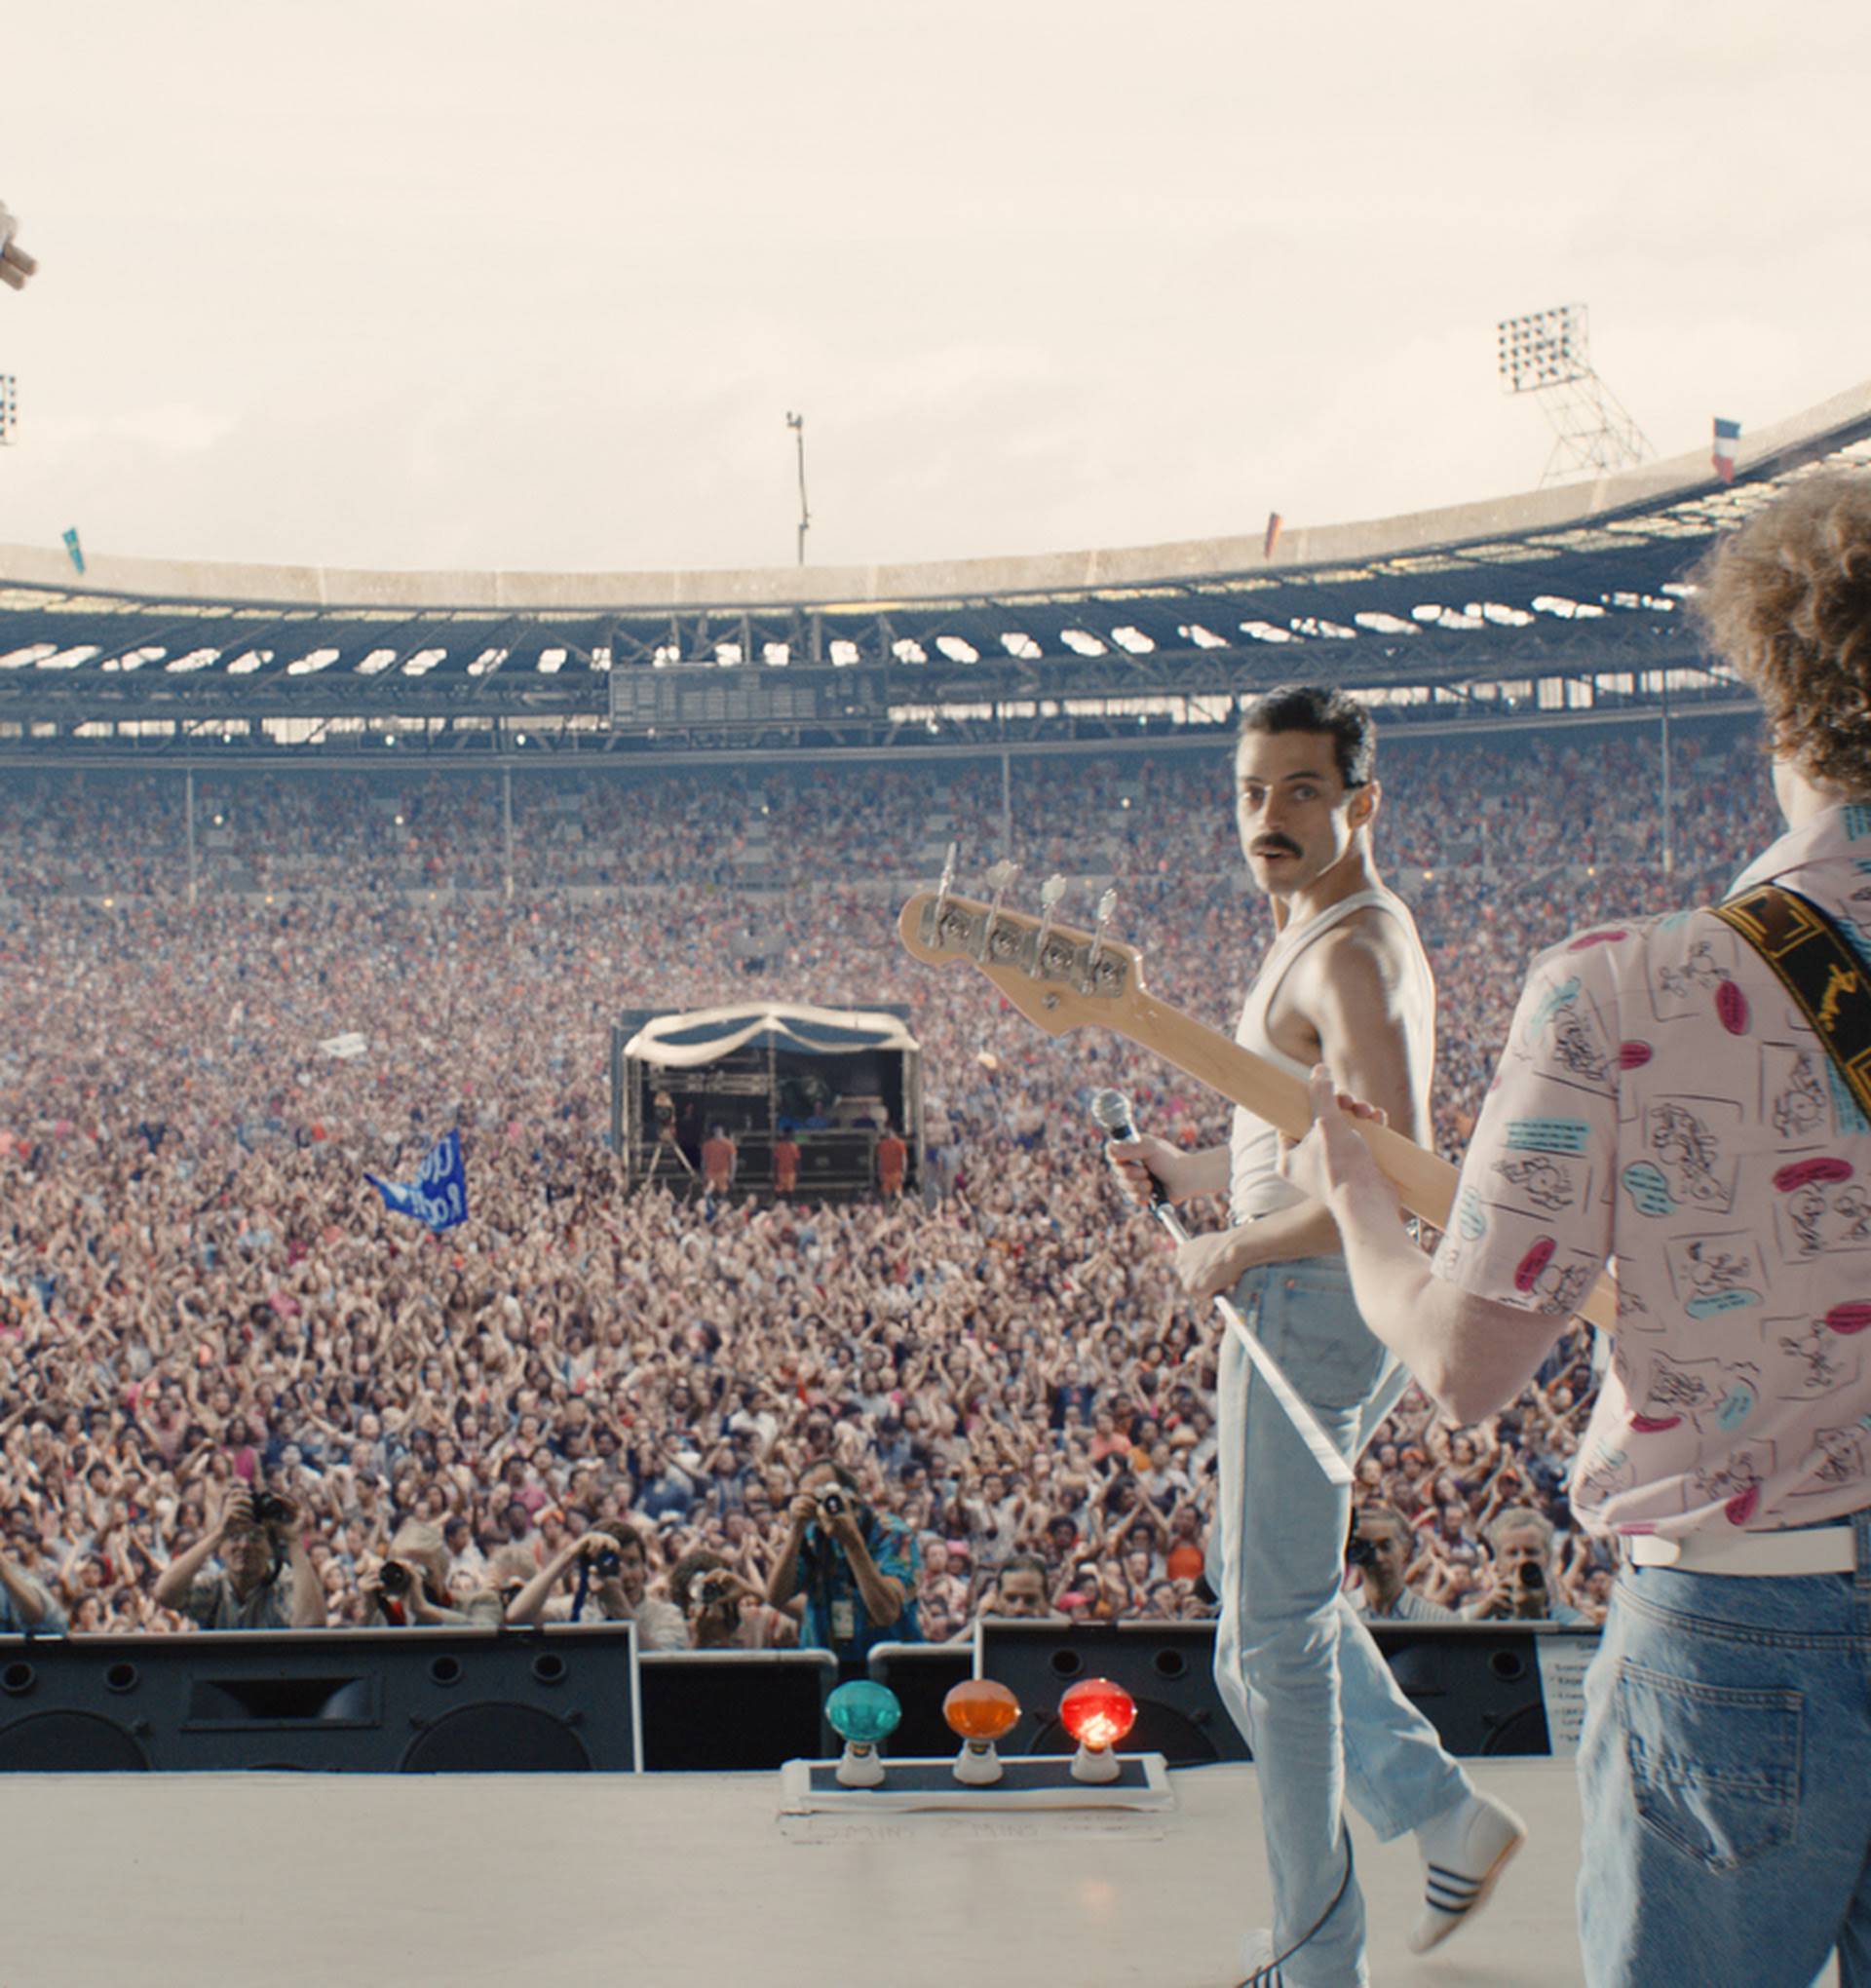 'Bohemian Rhapsody': Došao je prvi video iz nadolazećeg filma